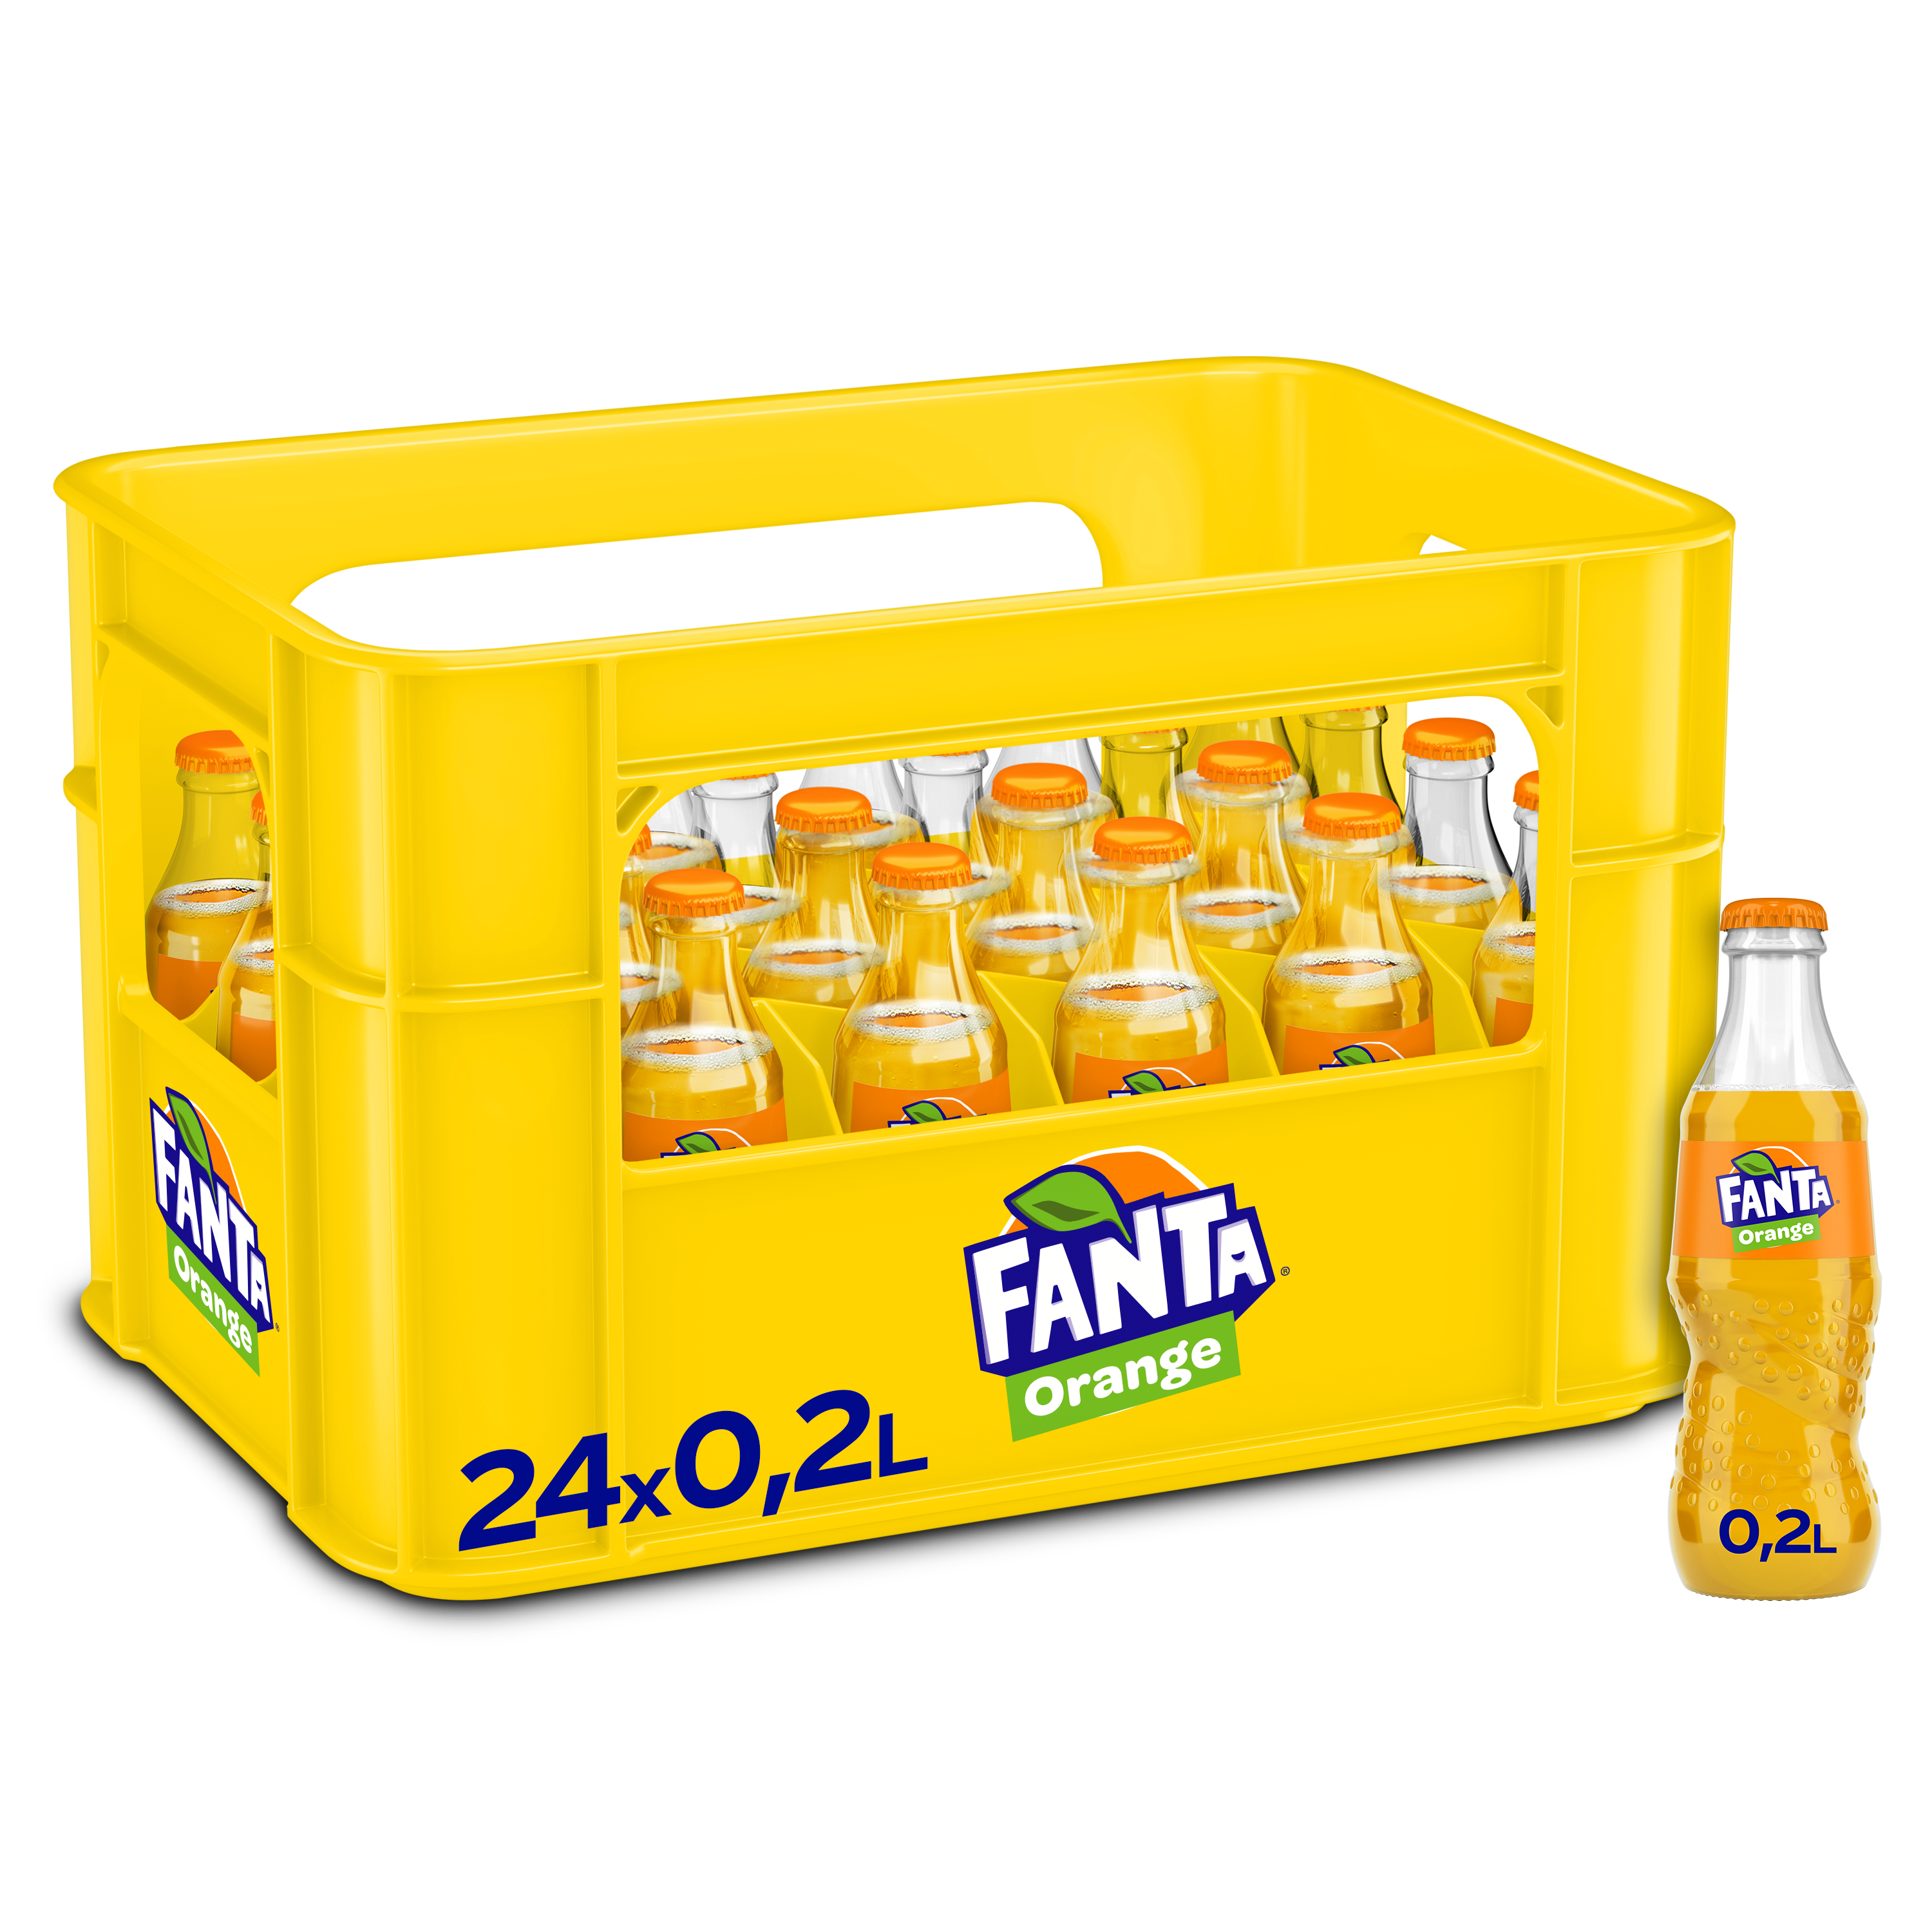 Fanta-Orange 24/0.2